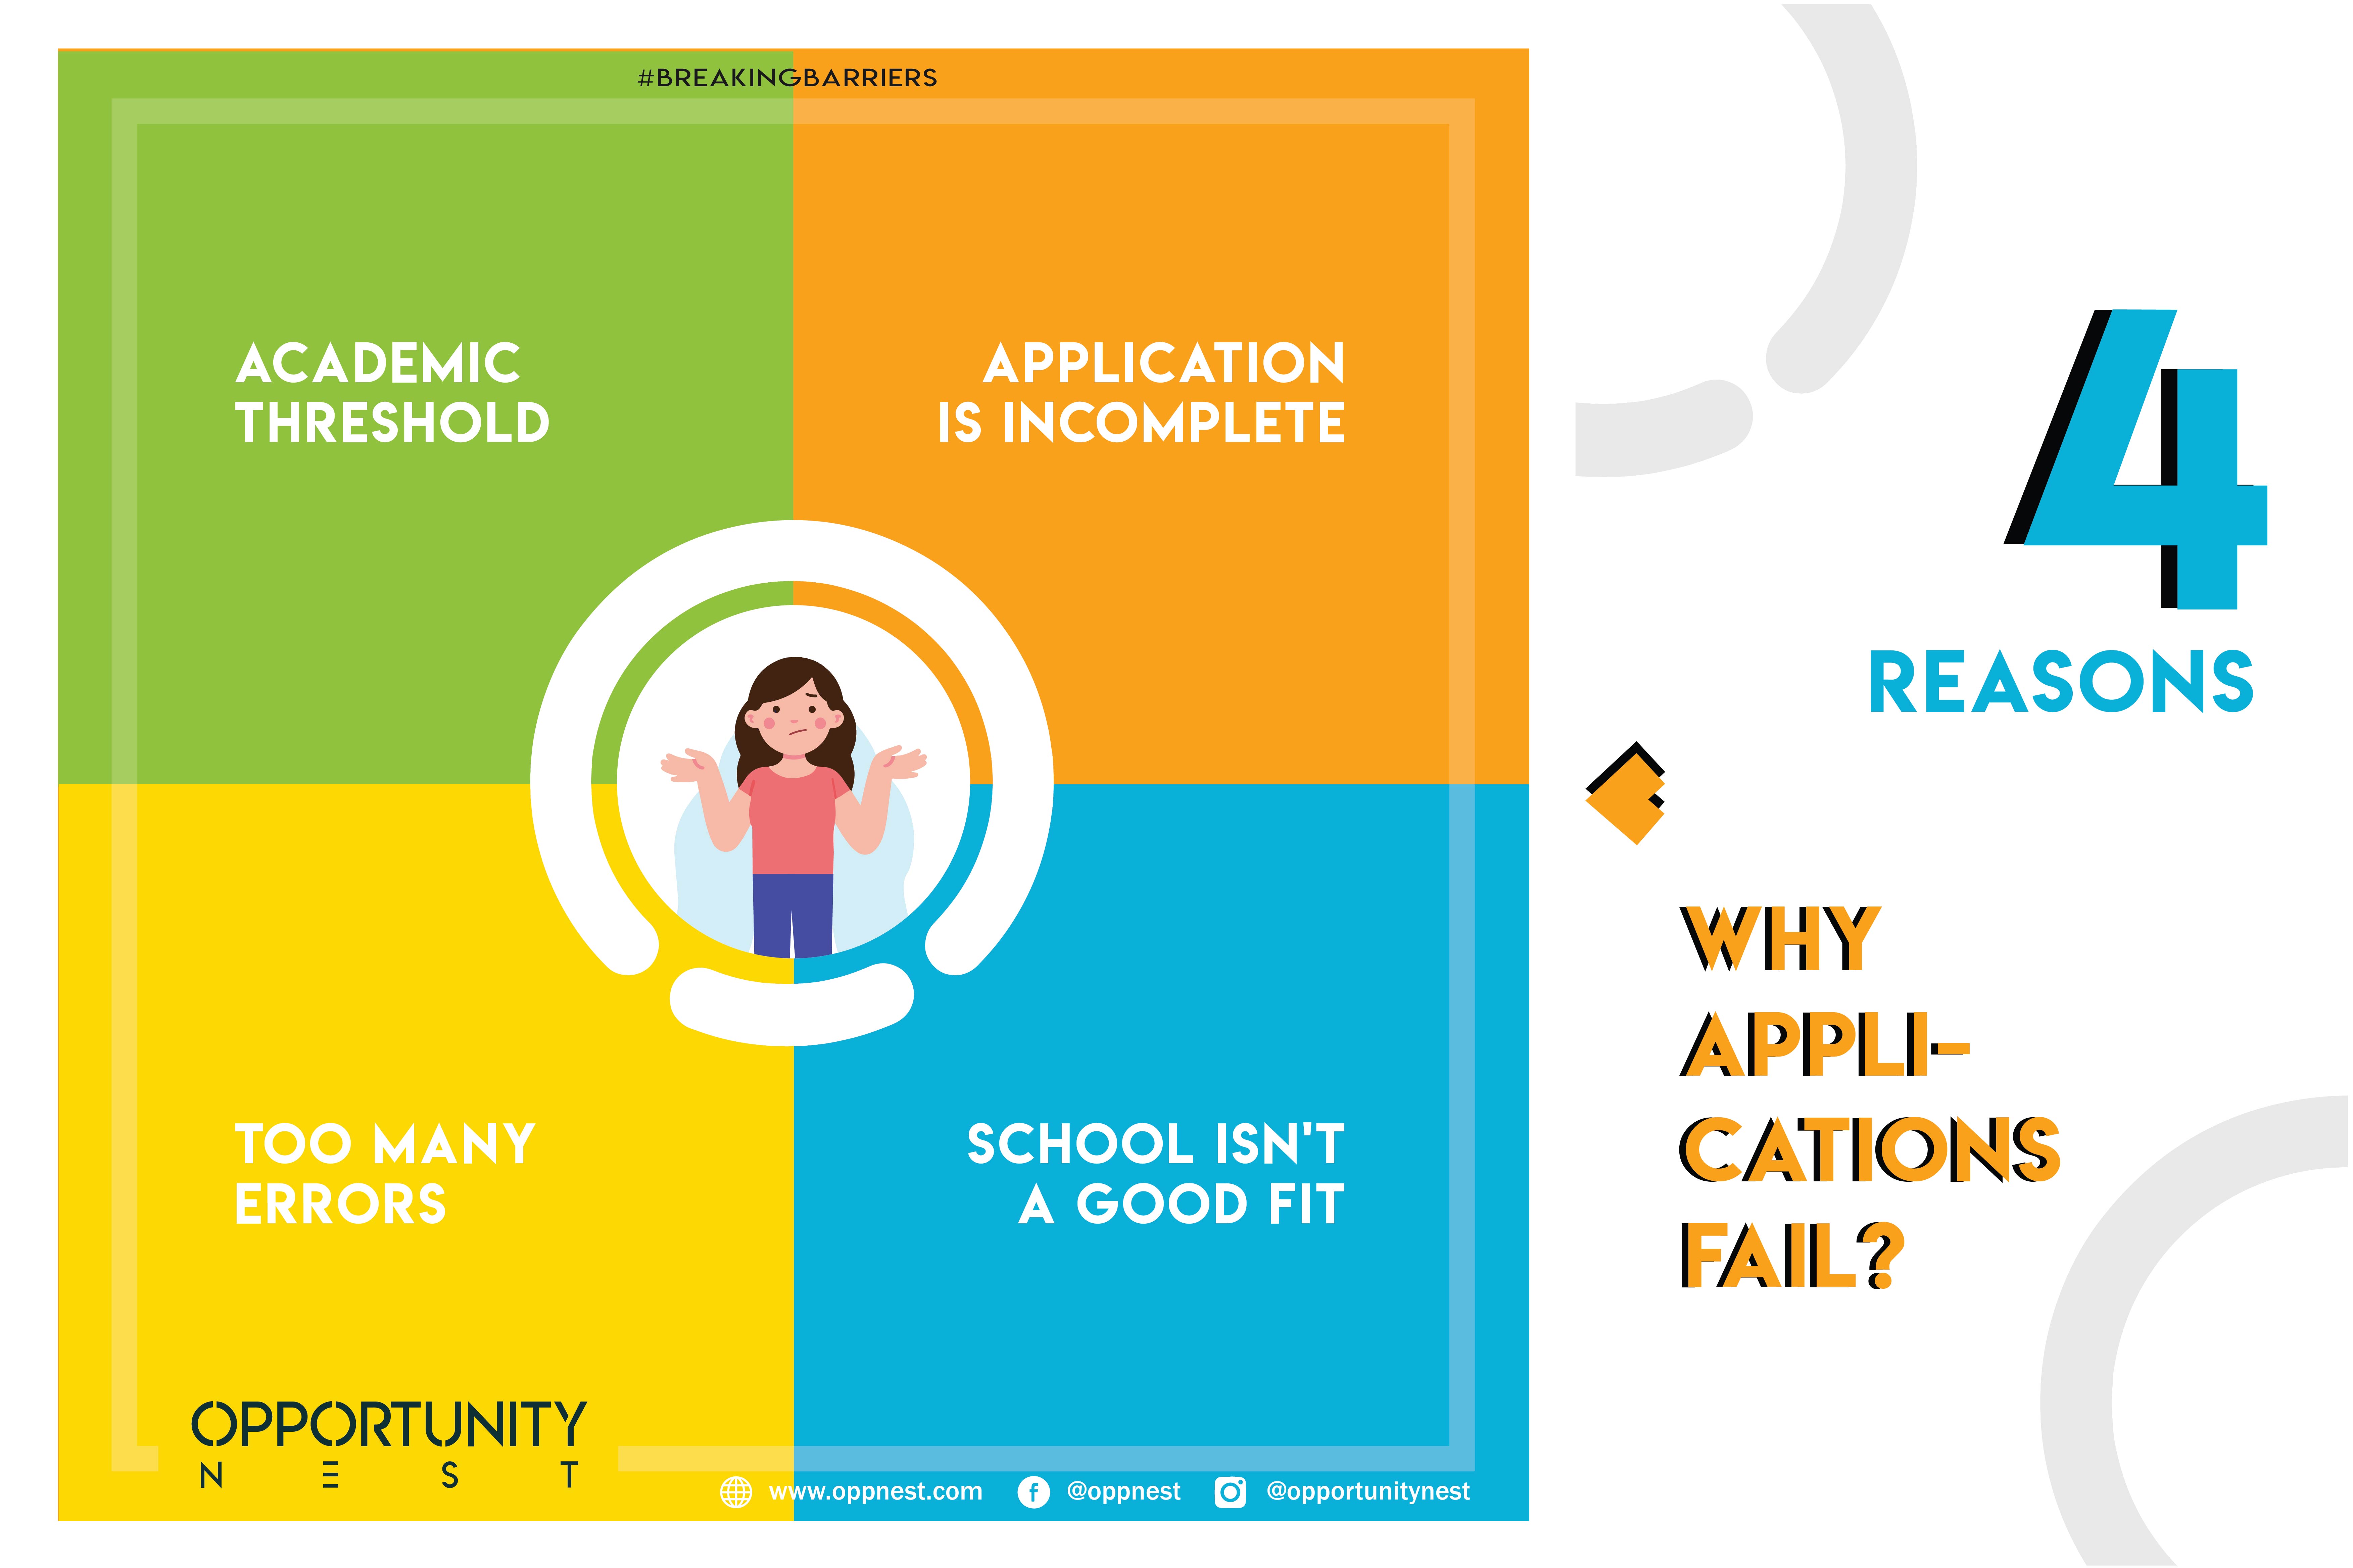 Why Do Applications Fail?